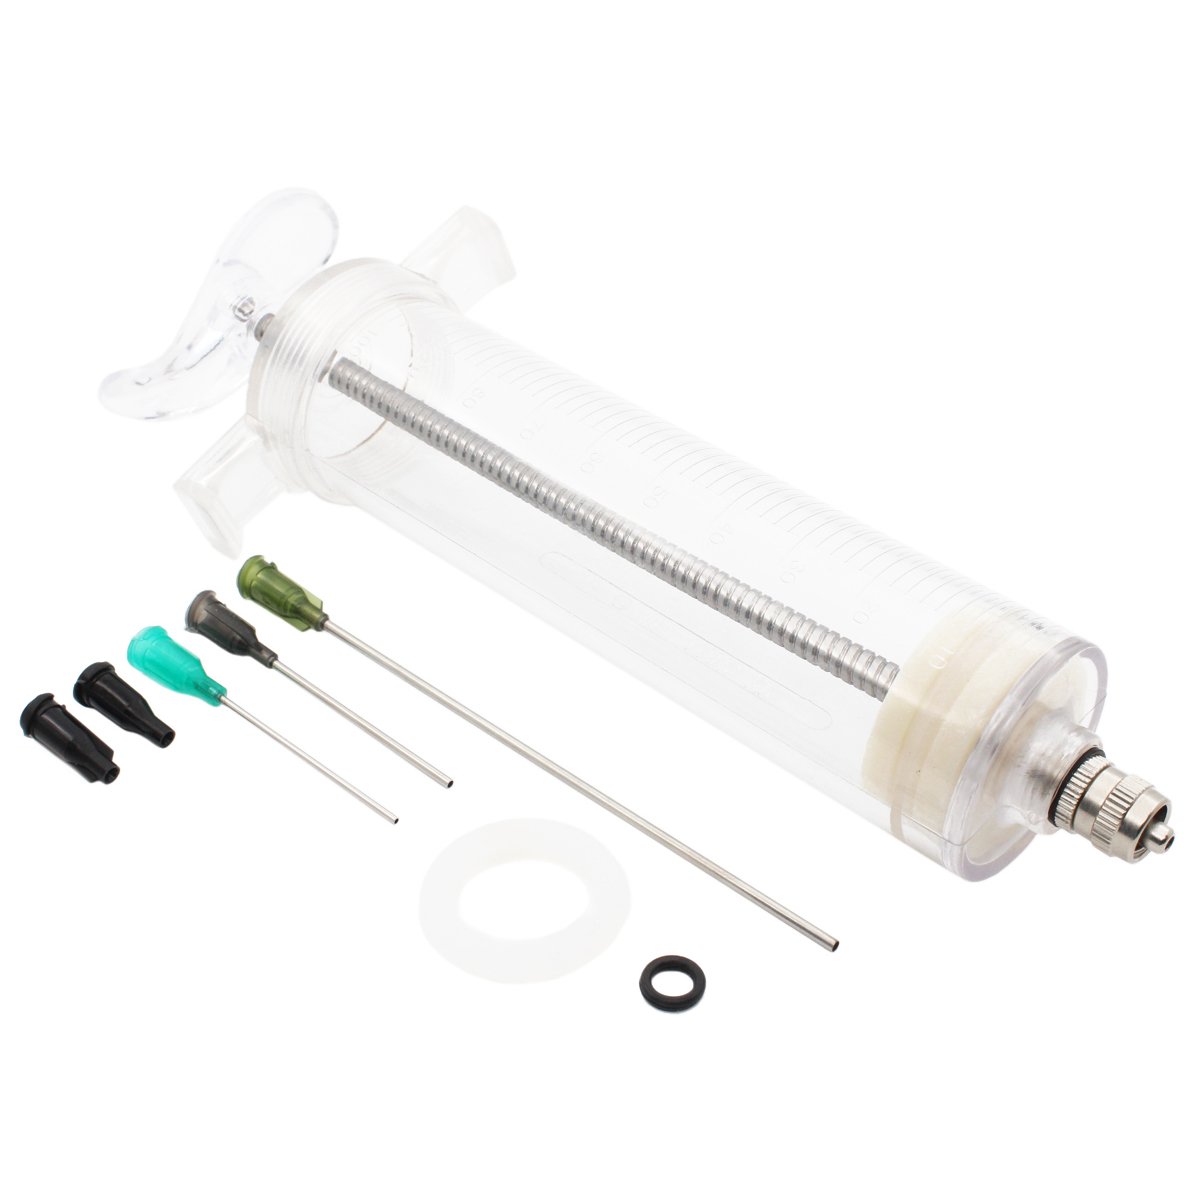 1ml, 3ml, 5ml,10ml, 20ml Glue Applicator Syringes with 14ga, 15ga,16ga,  18ga, 20ga Blunt Tip